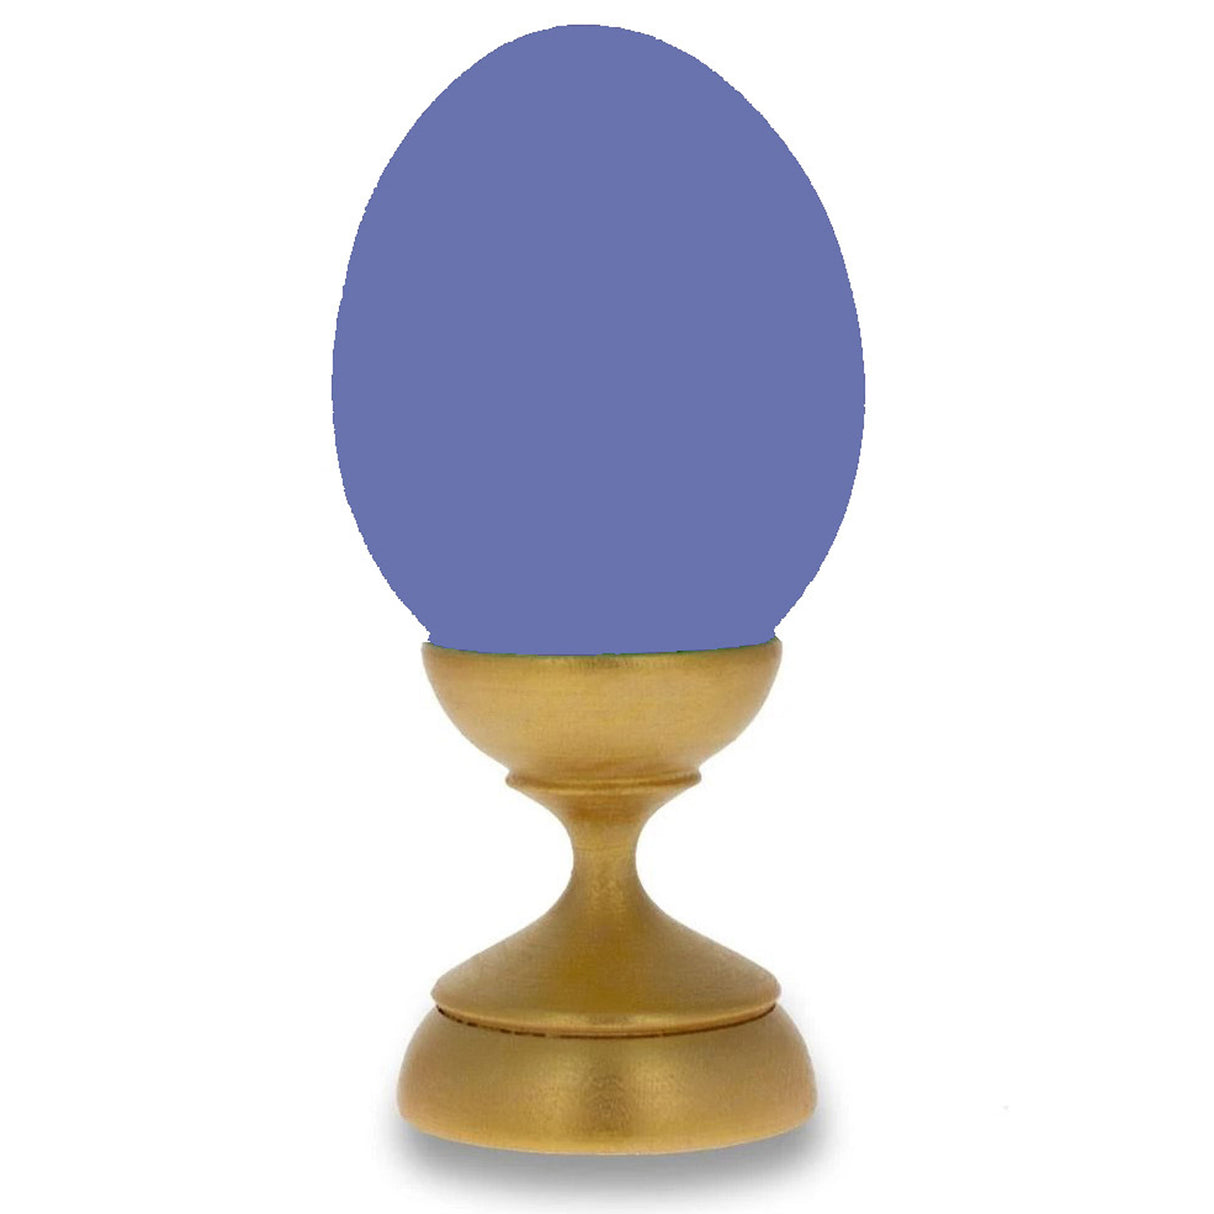 Powder Tropical Blue Batik Dye for Pysanky Easter Eggs Decorating in Blue color